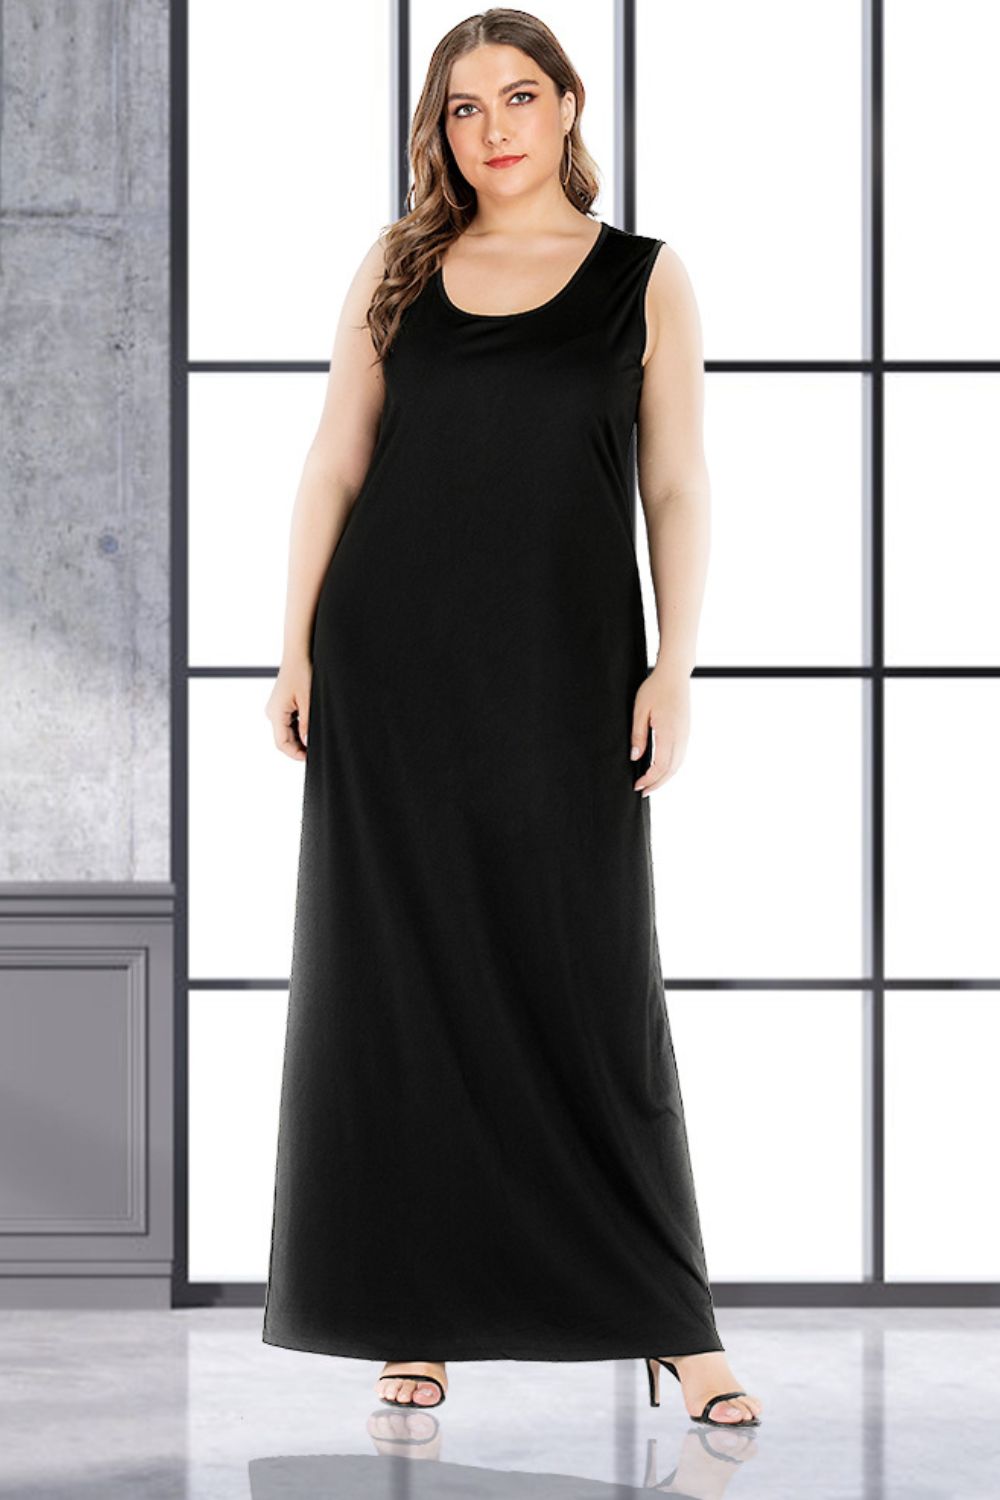 Plus Size Scoop Neck Maxi Tank Dress - Casual & Maxi Dresses - FITGGINS